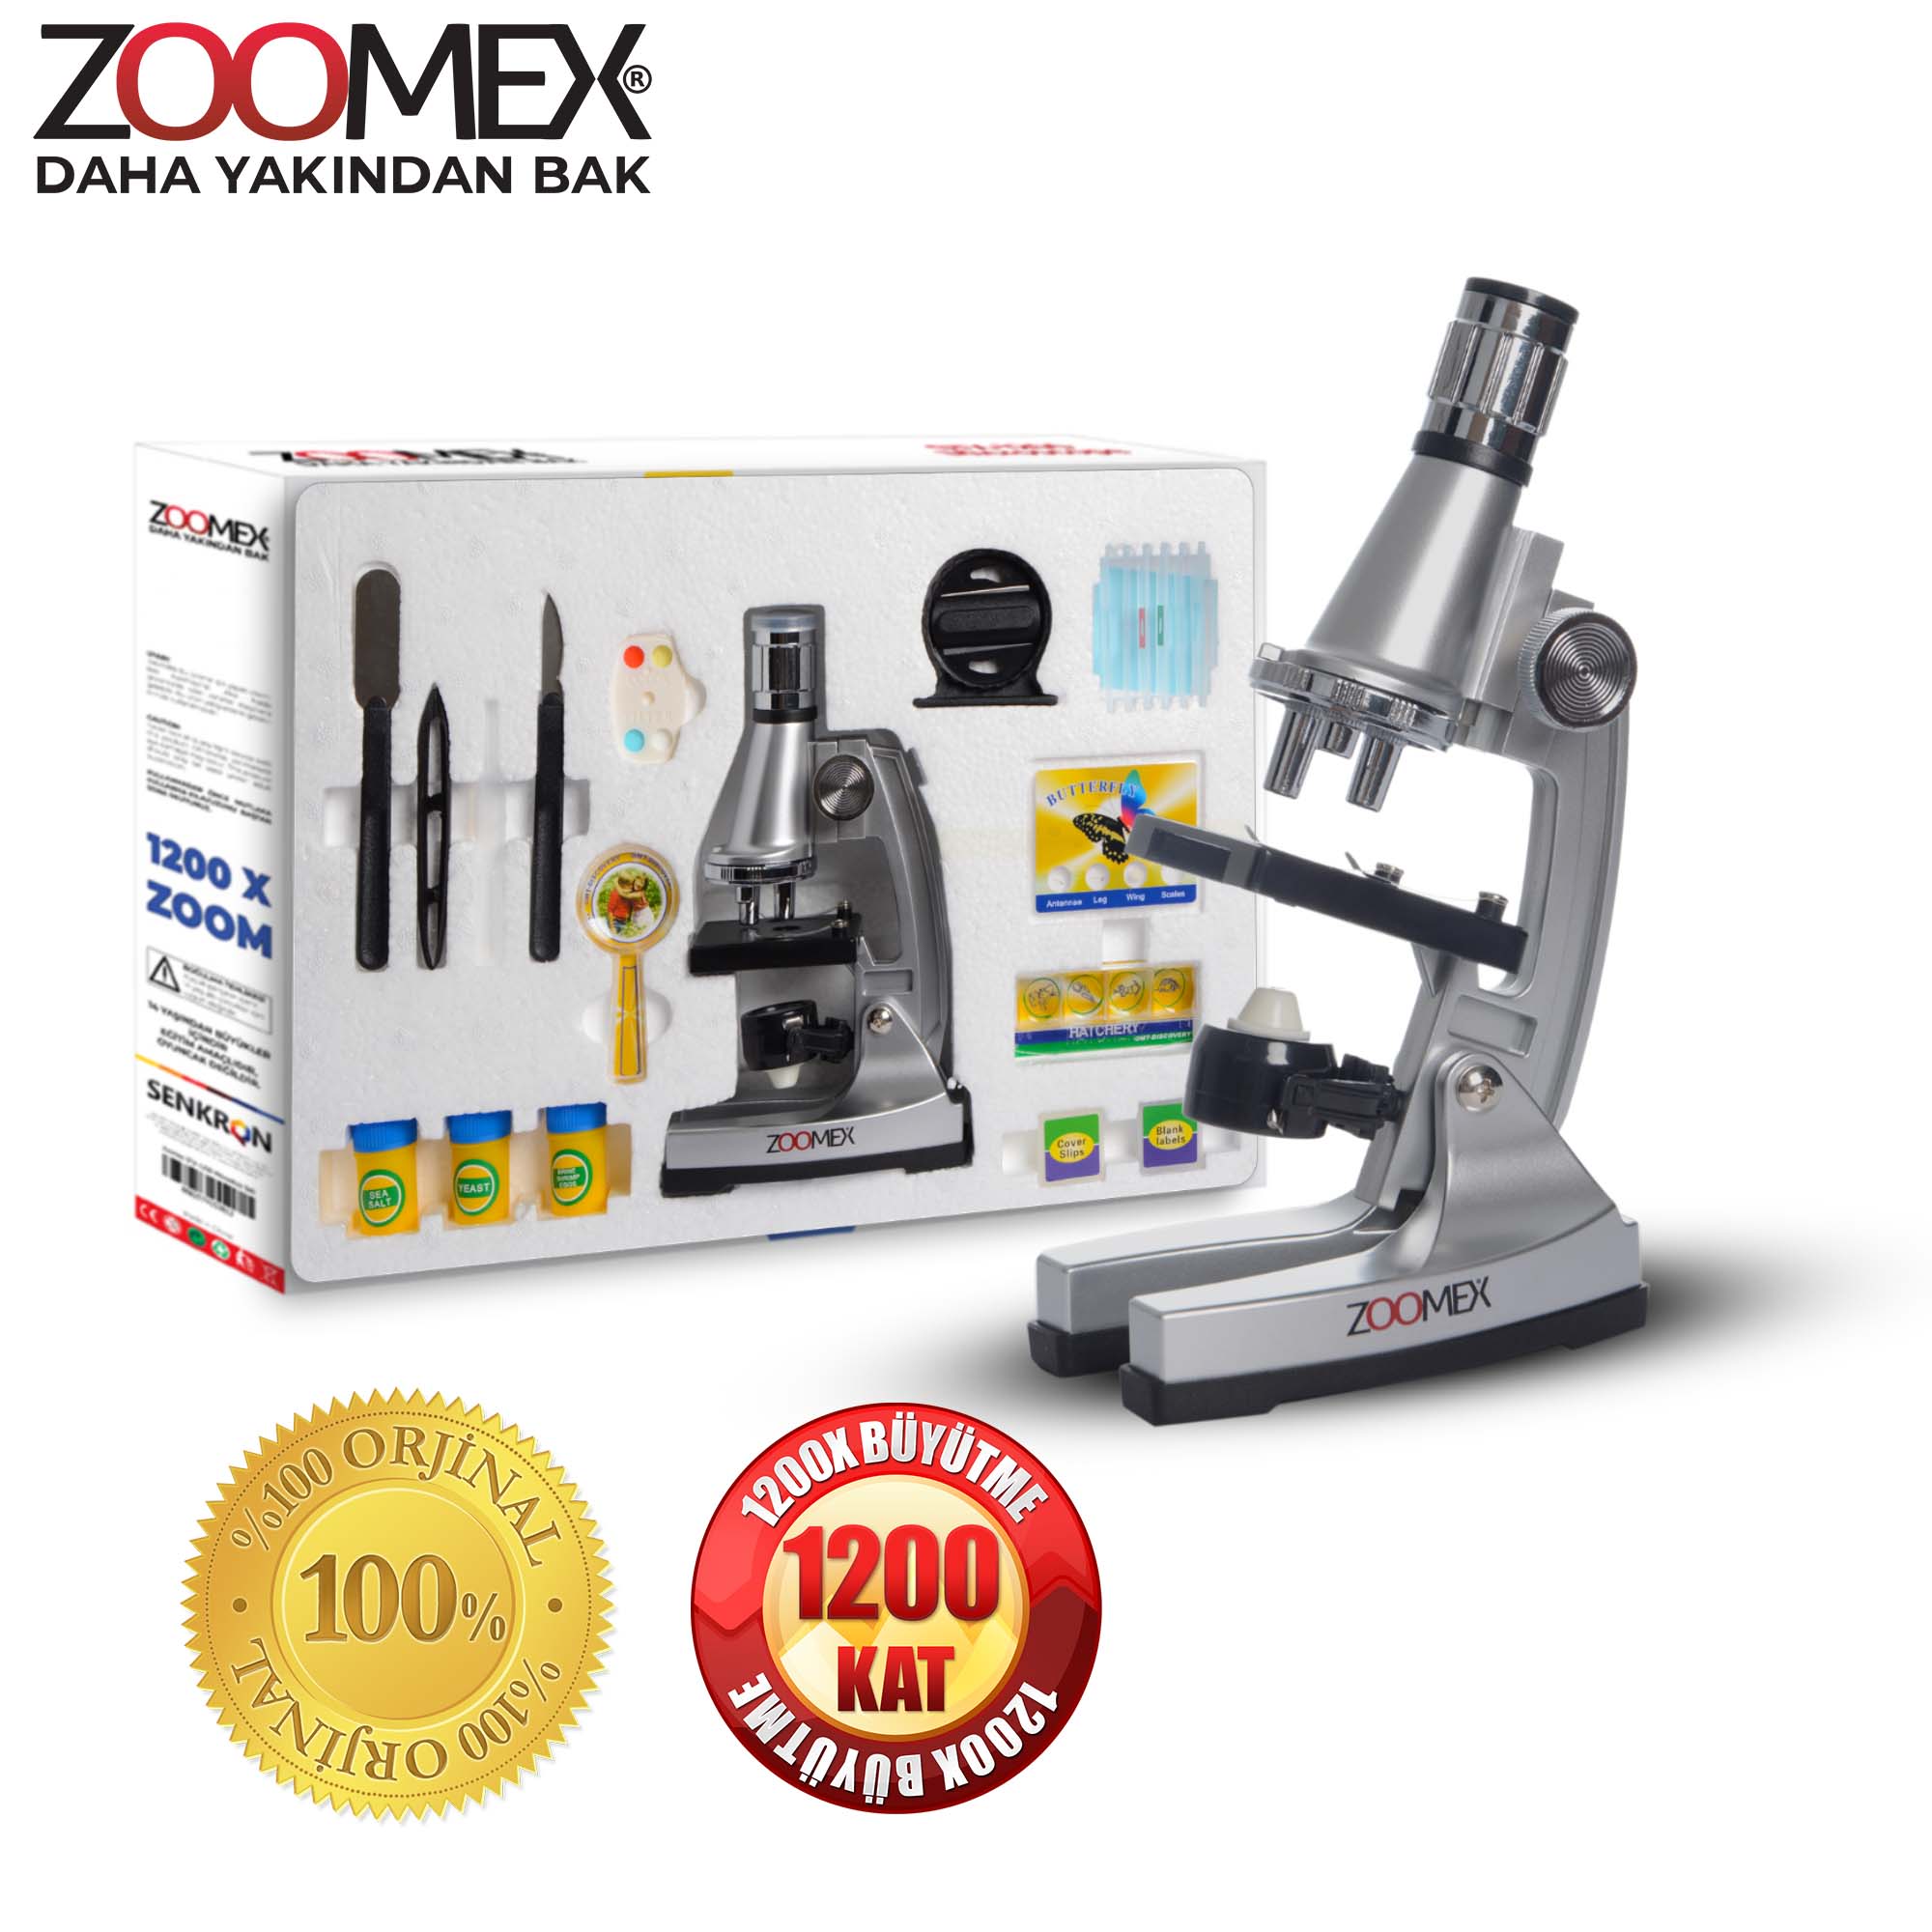 Zoomex Mpz-c1200 Mikroskop- Eğitici Ve Öğretici